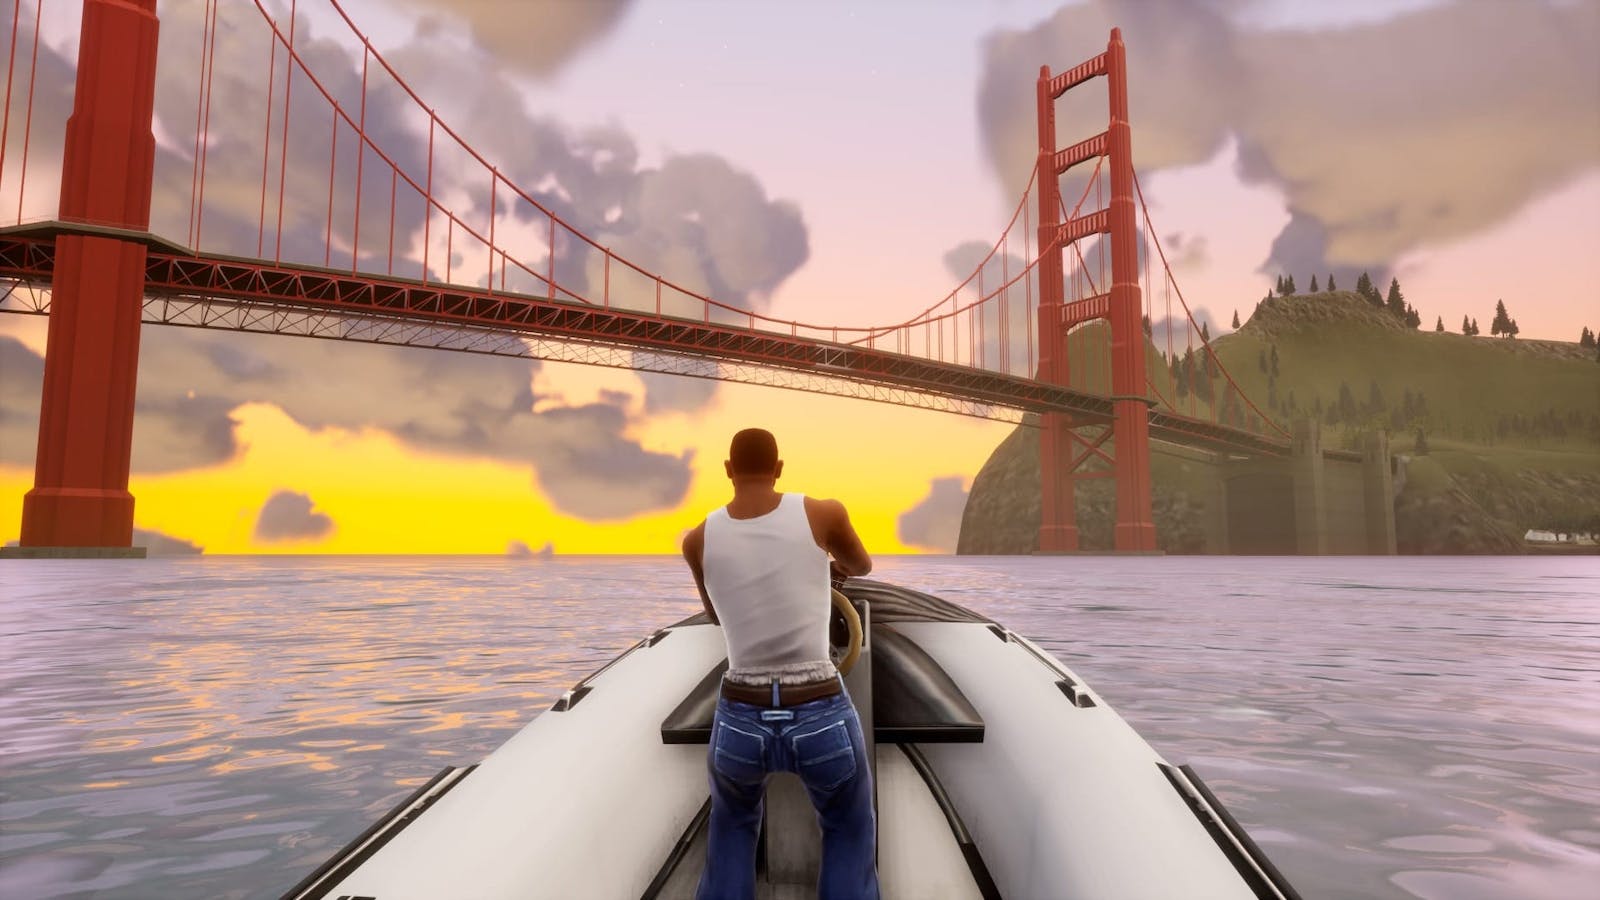 Rockstar bringing 'latest games' to PC. GTA V?